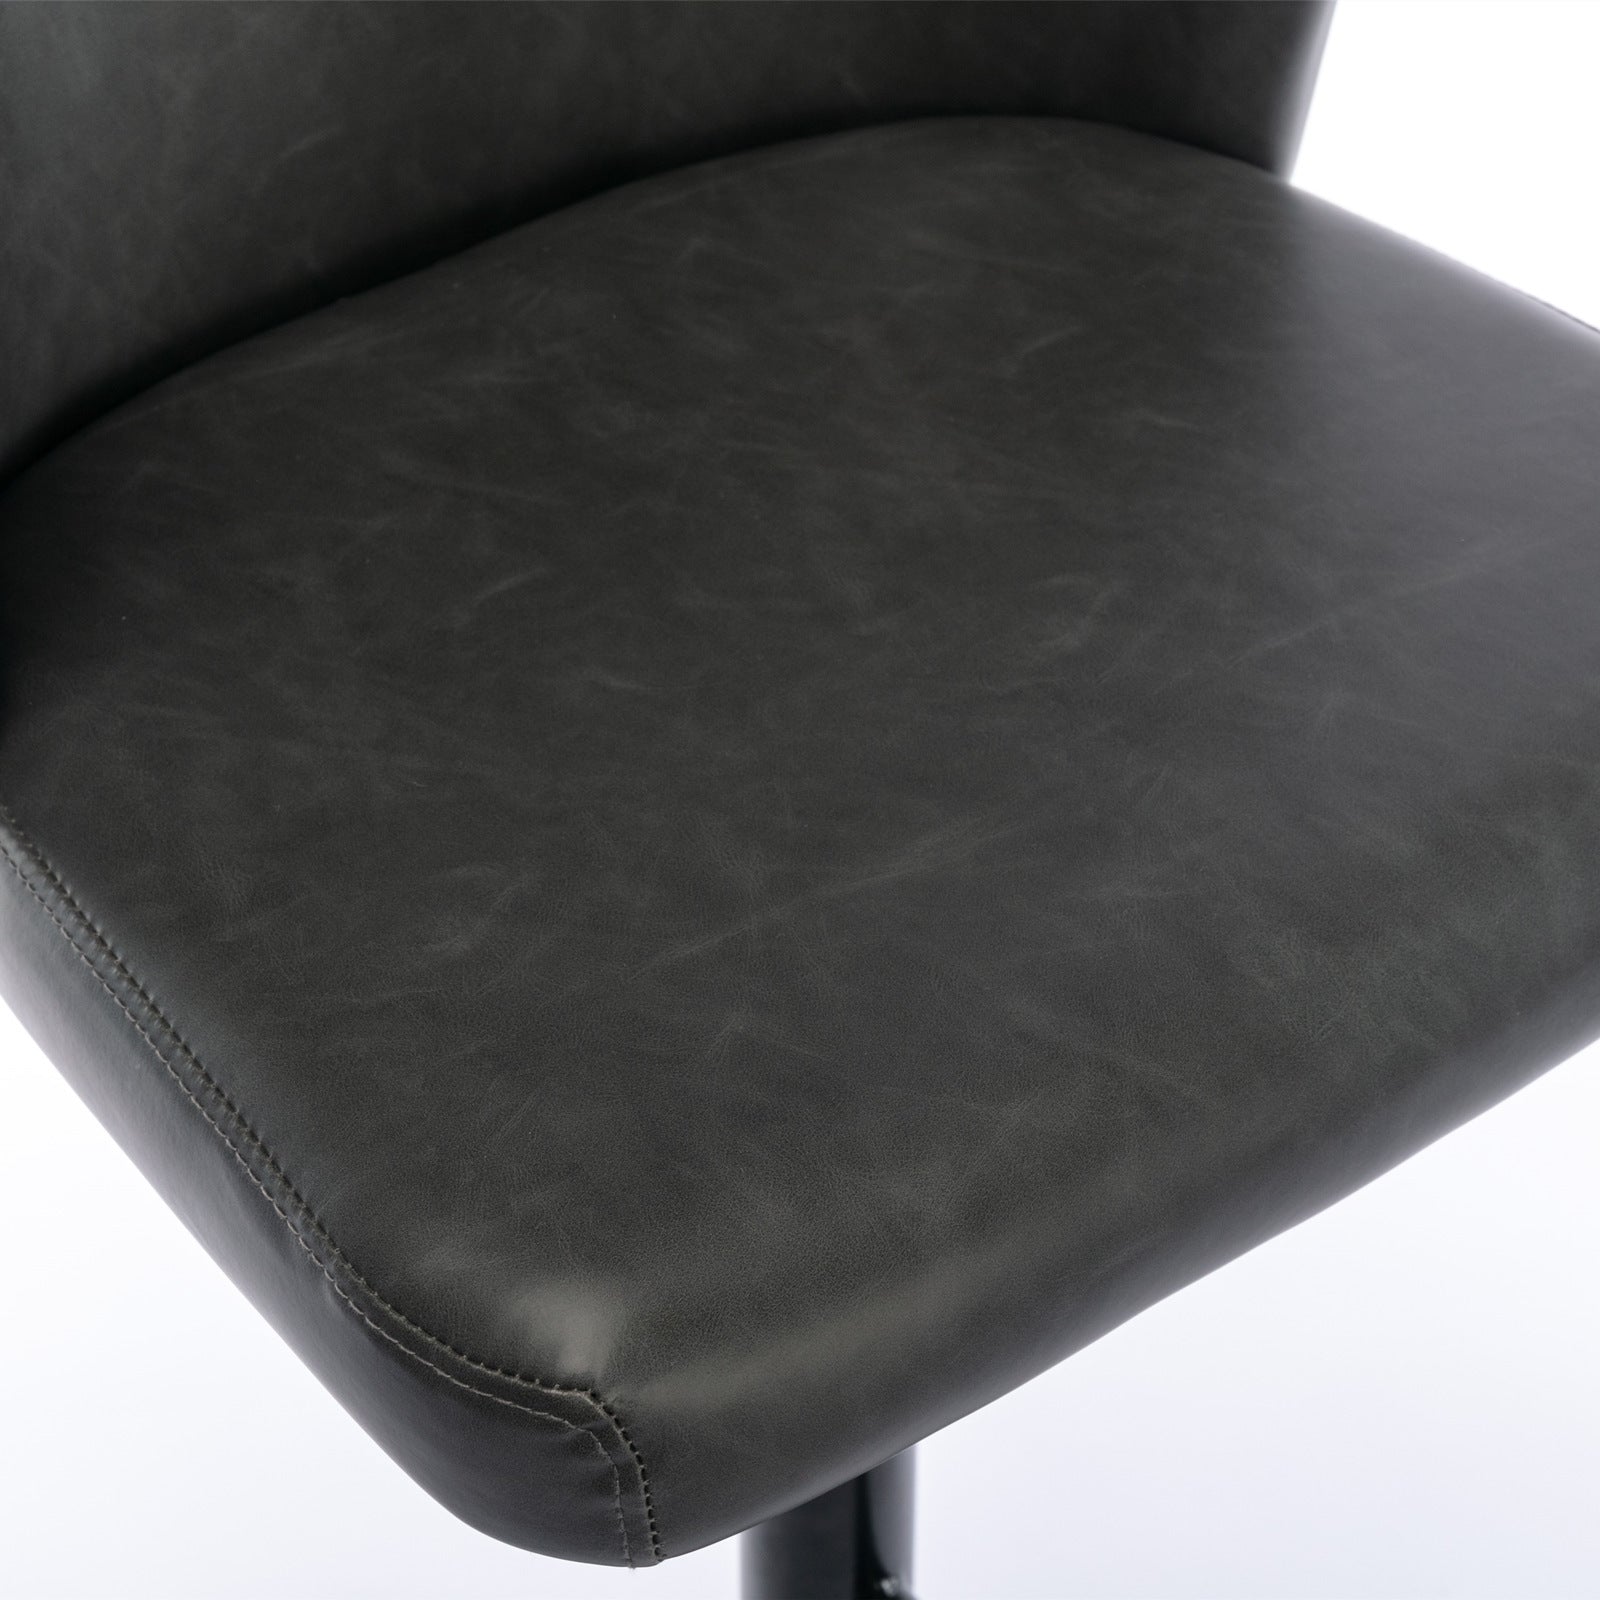 A&A Furniture Modern Swivel Bar Stools in Dark Gray Set of 2